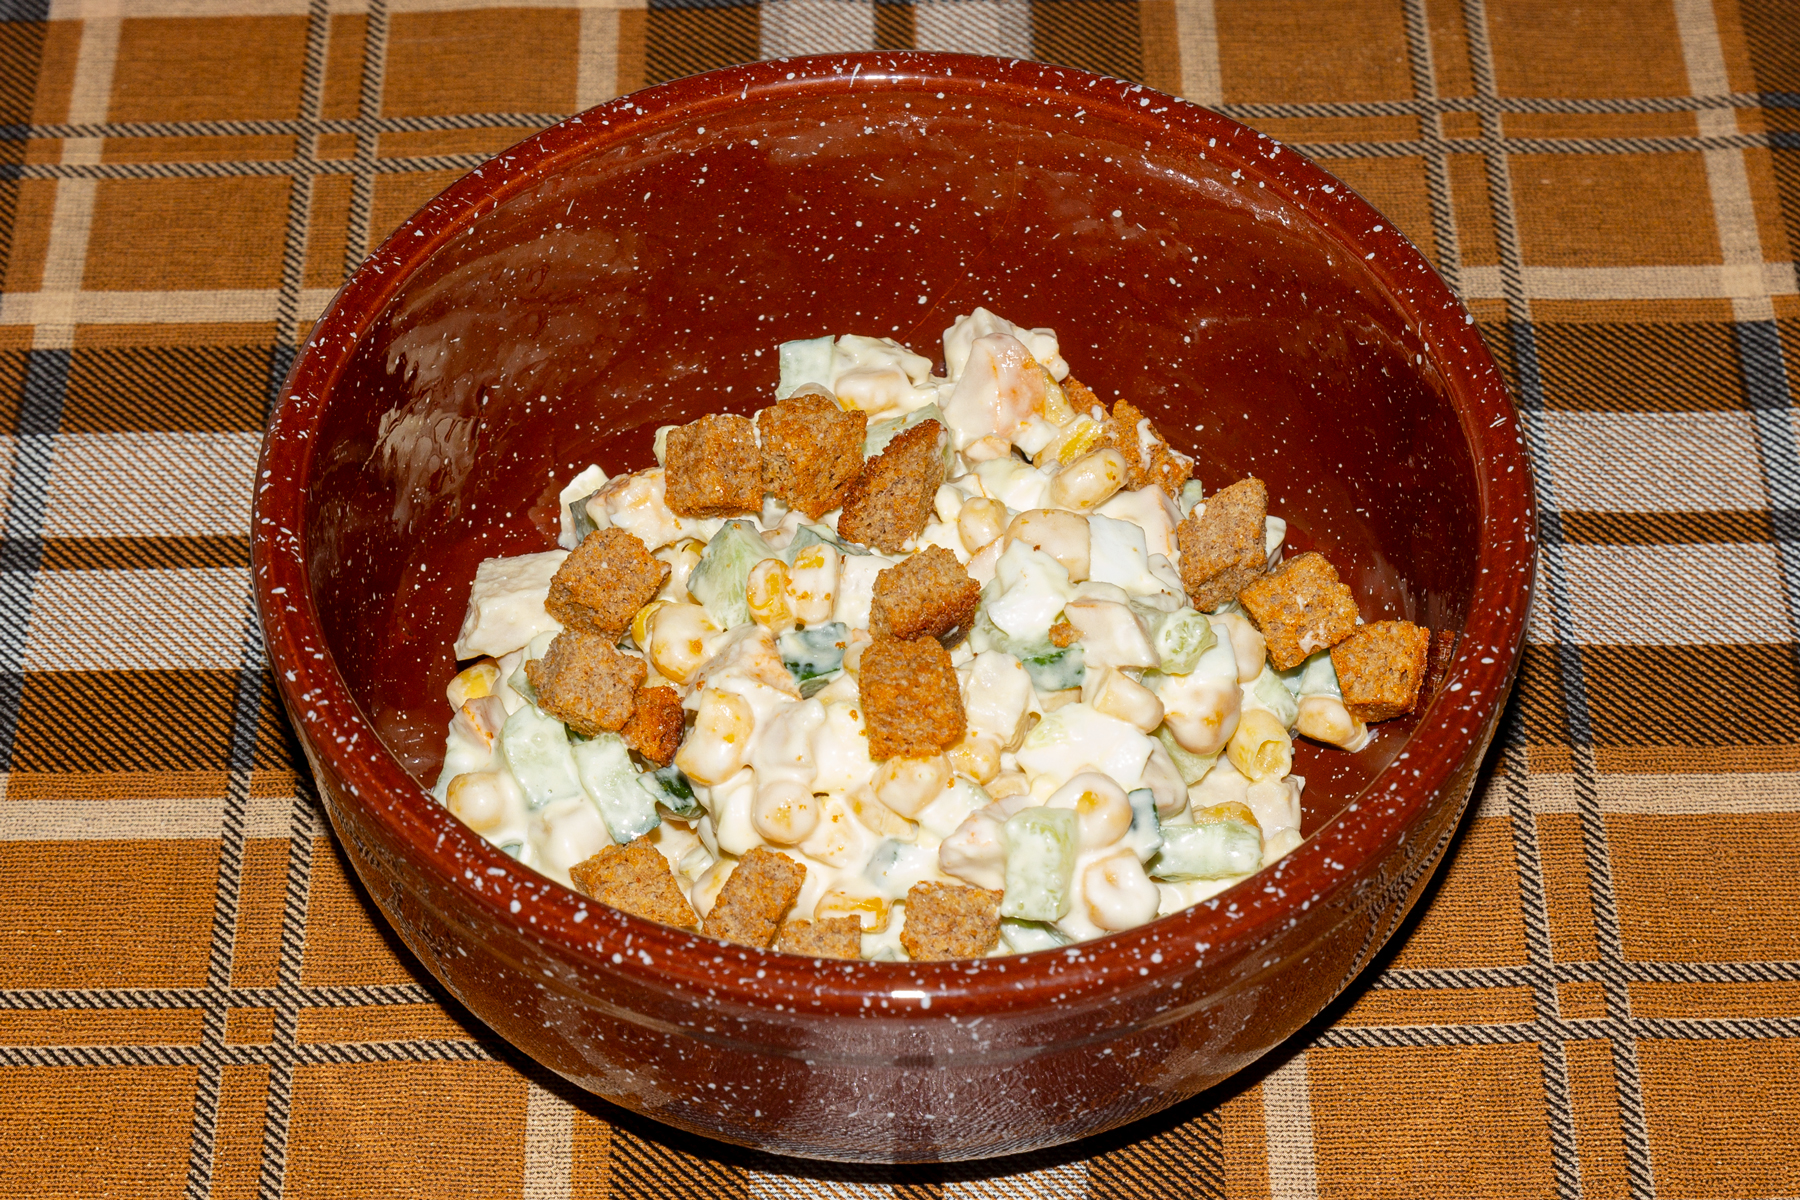  Салат с копчёной курицей, кукурузой и шампиньонами 